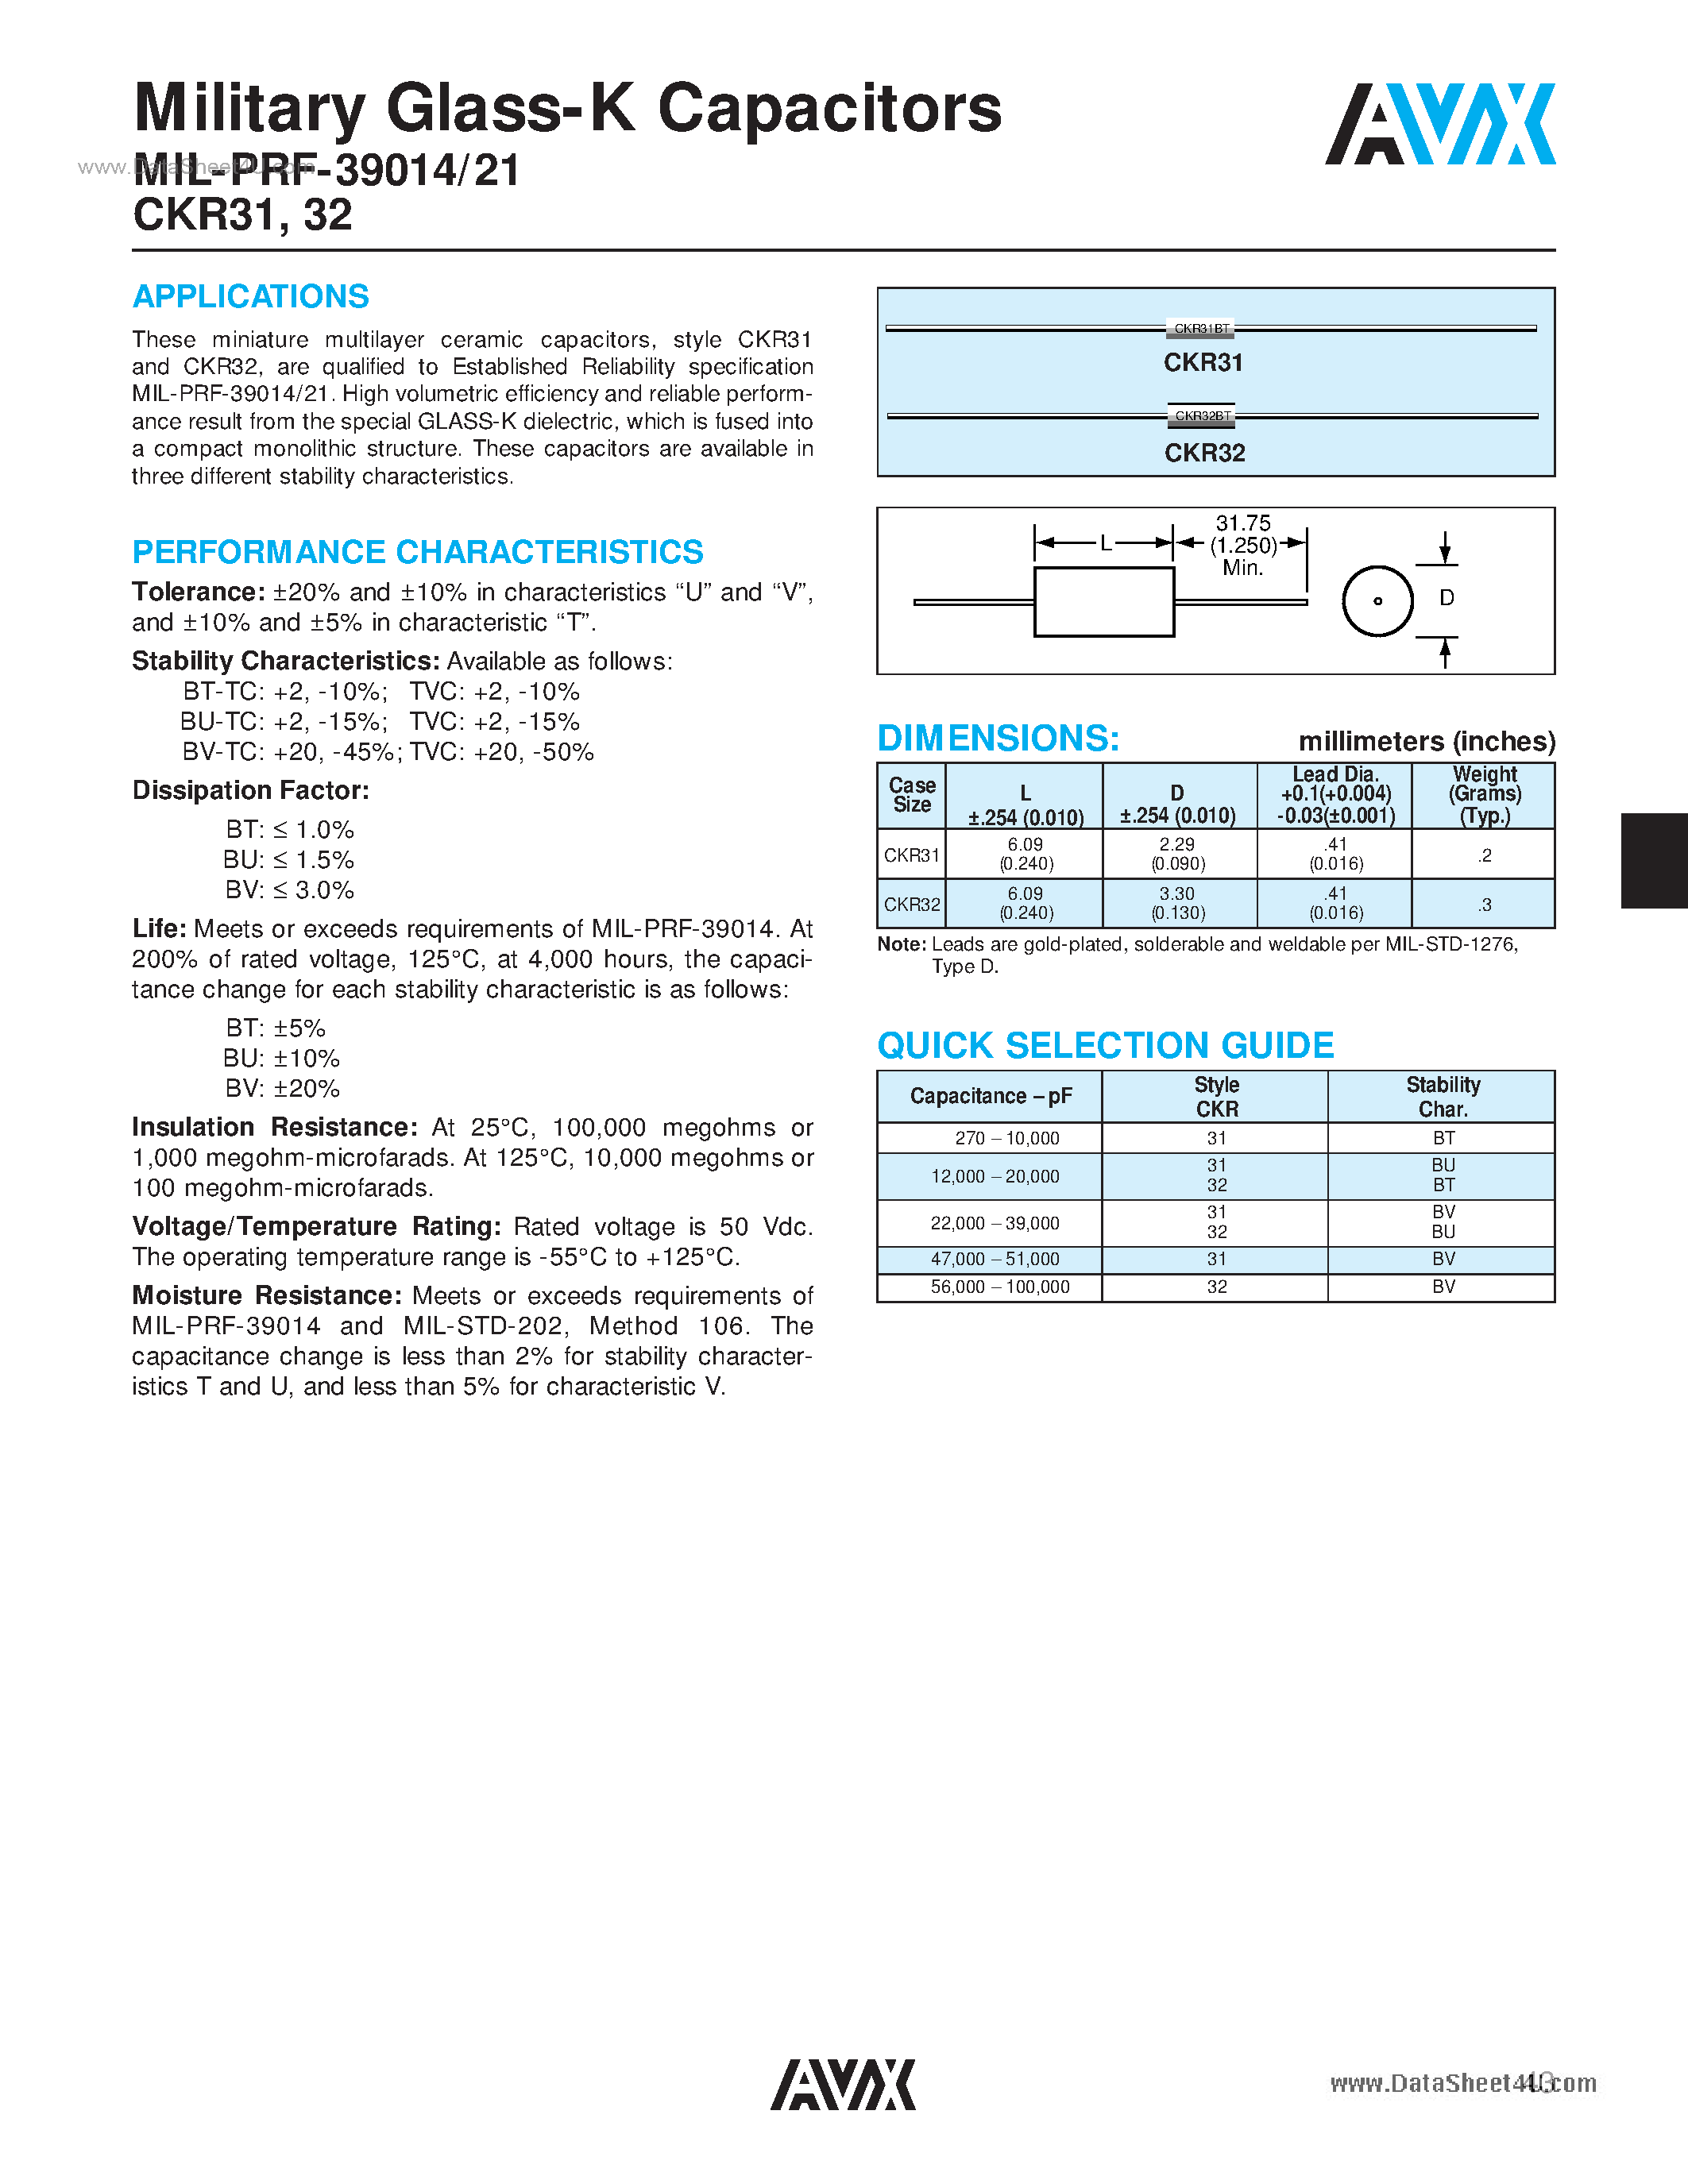 Datasheet M39014 - Military Glass-K Capacitors page 1